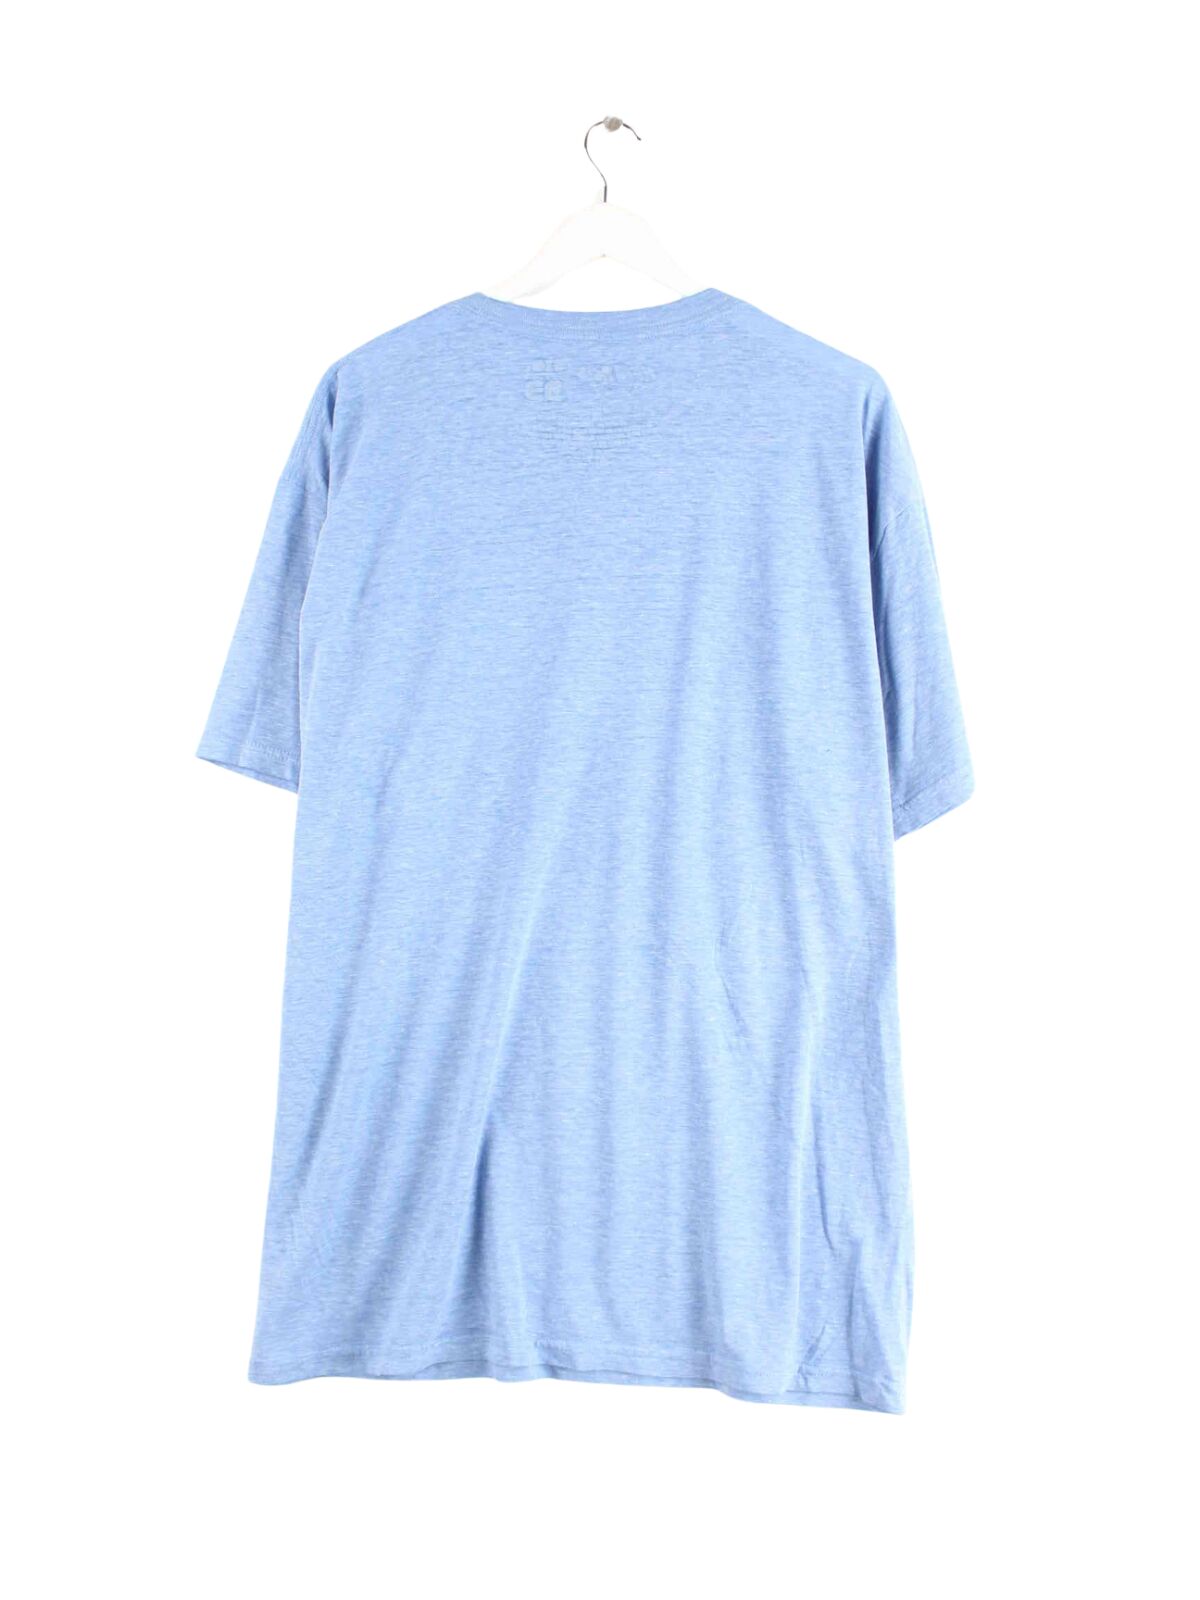 Hard Rock Cafe Hollywood Imagine Dragon Print T-Shirt Blau XXL (back image)